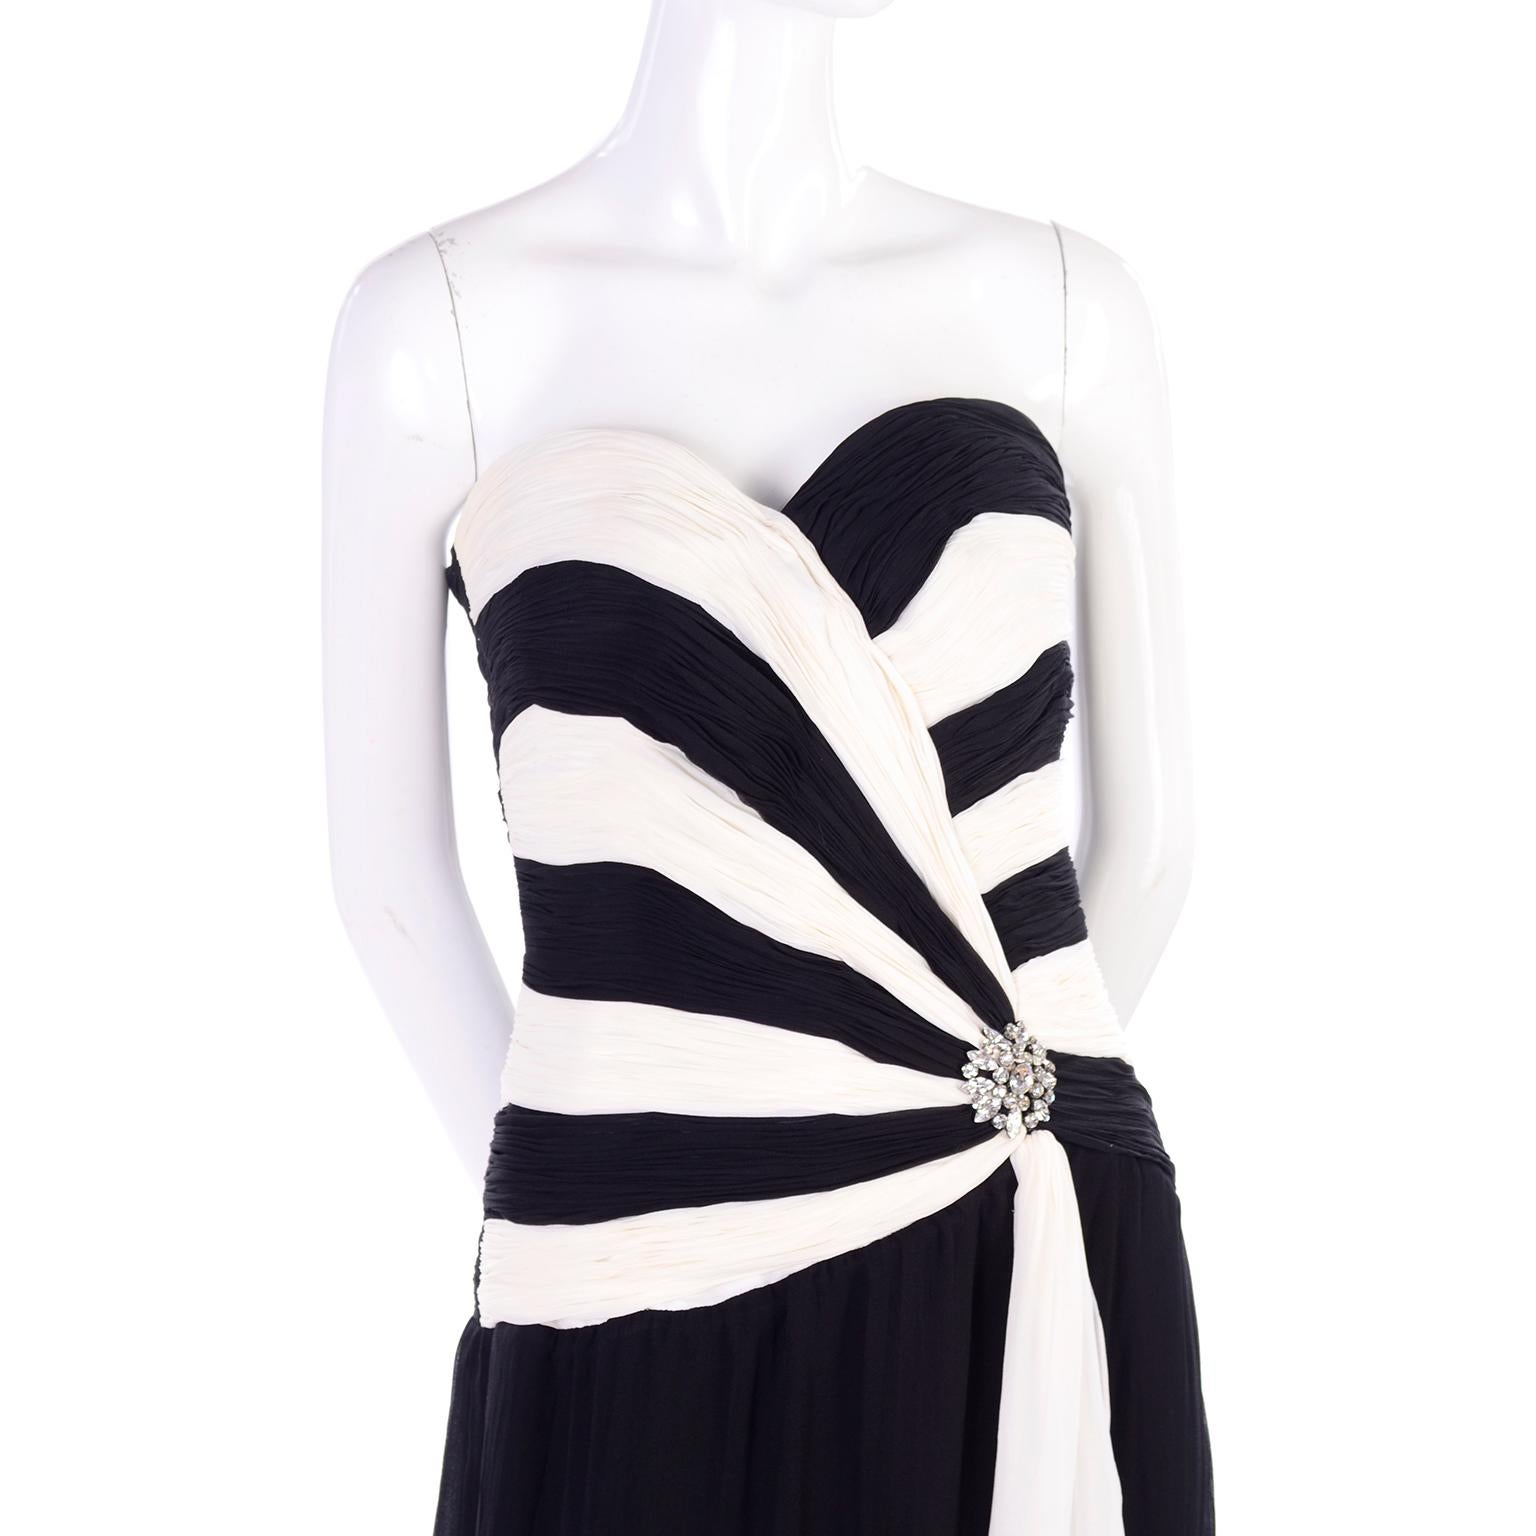 strapless black and white dress